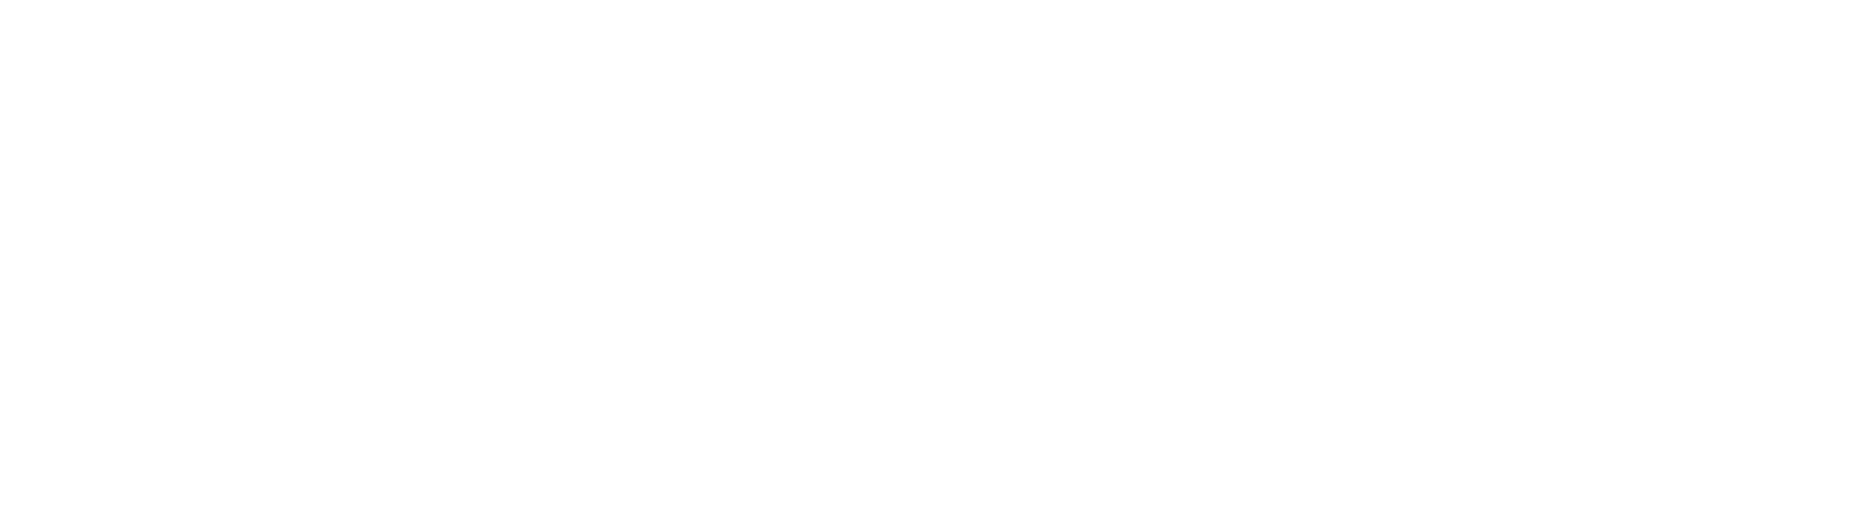 delonghi white logo